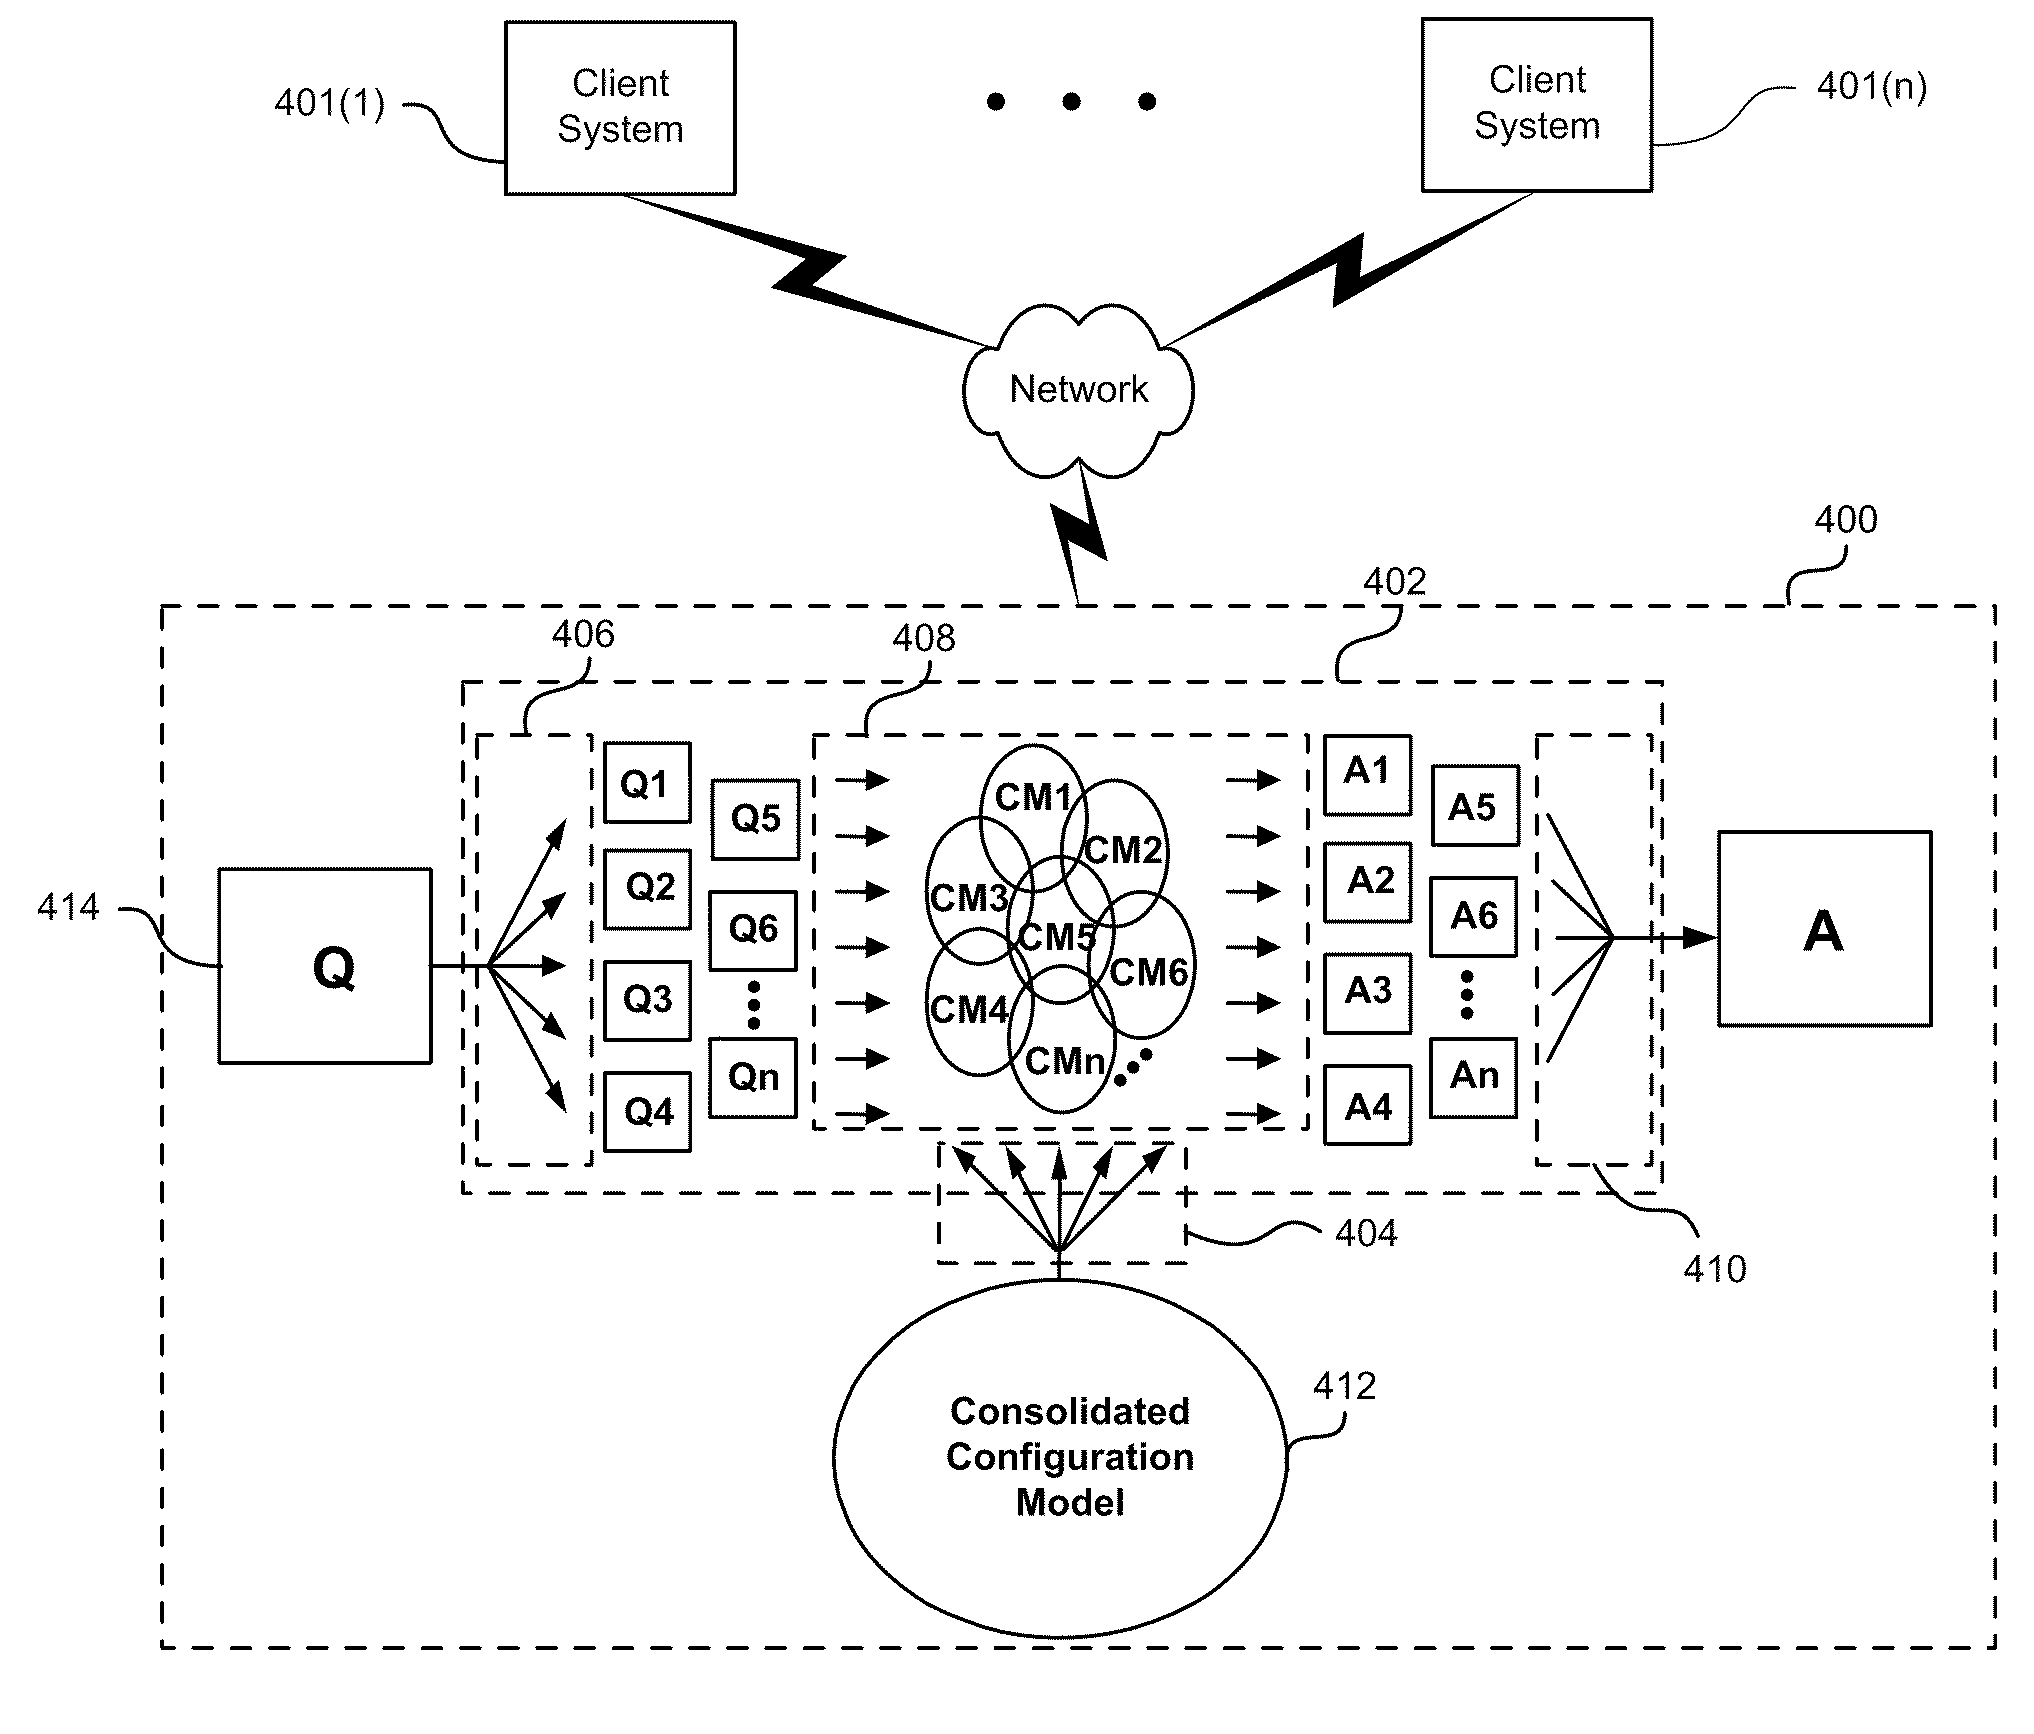 Complex Configuration Processing Using Configuration Sub-Models